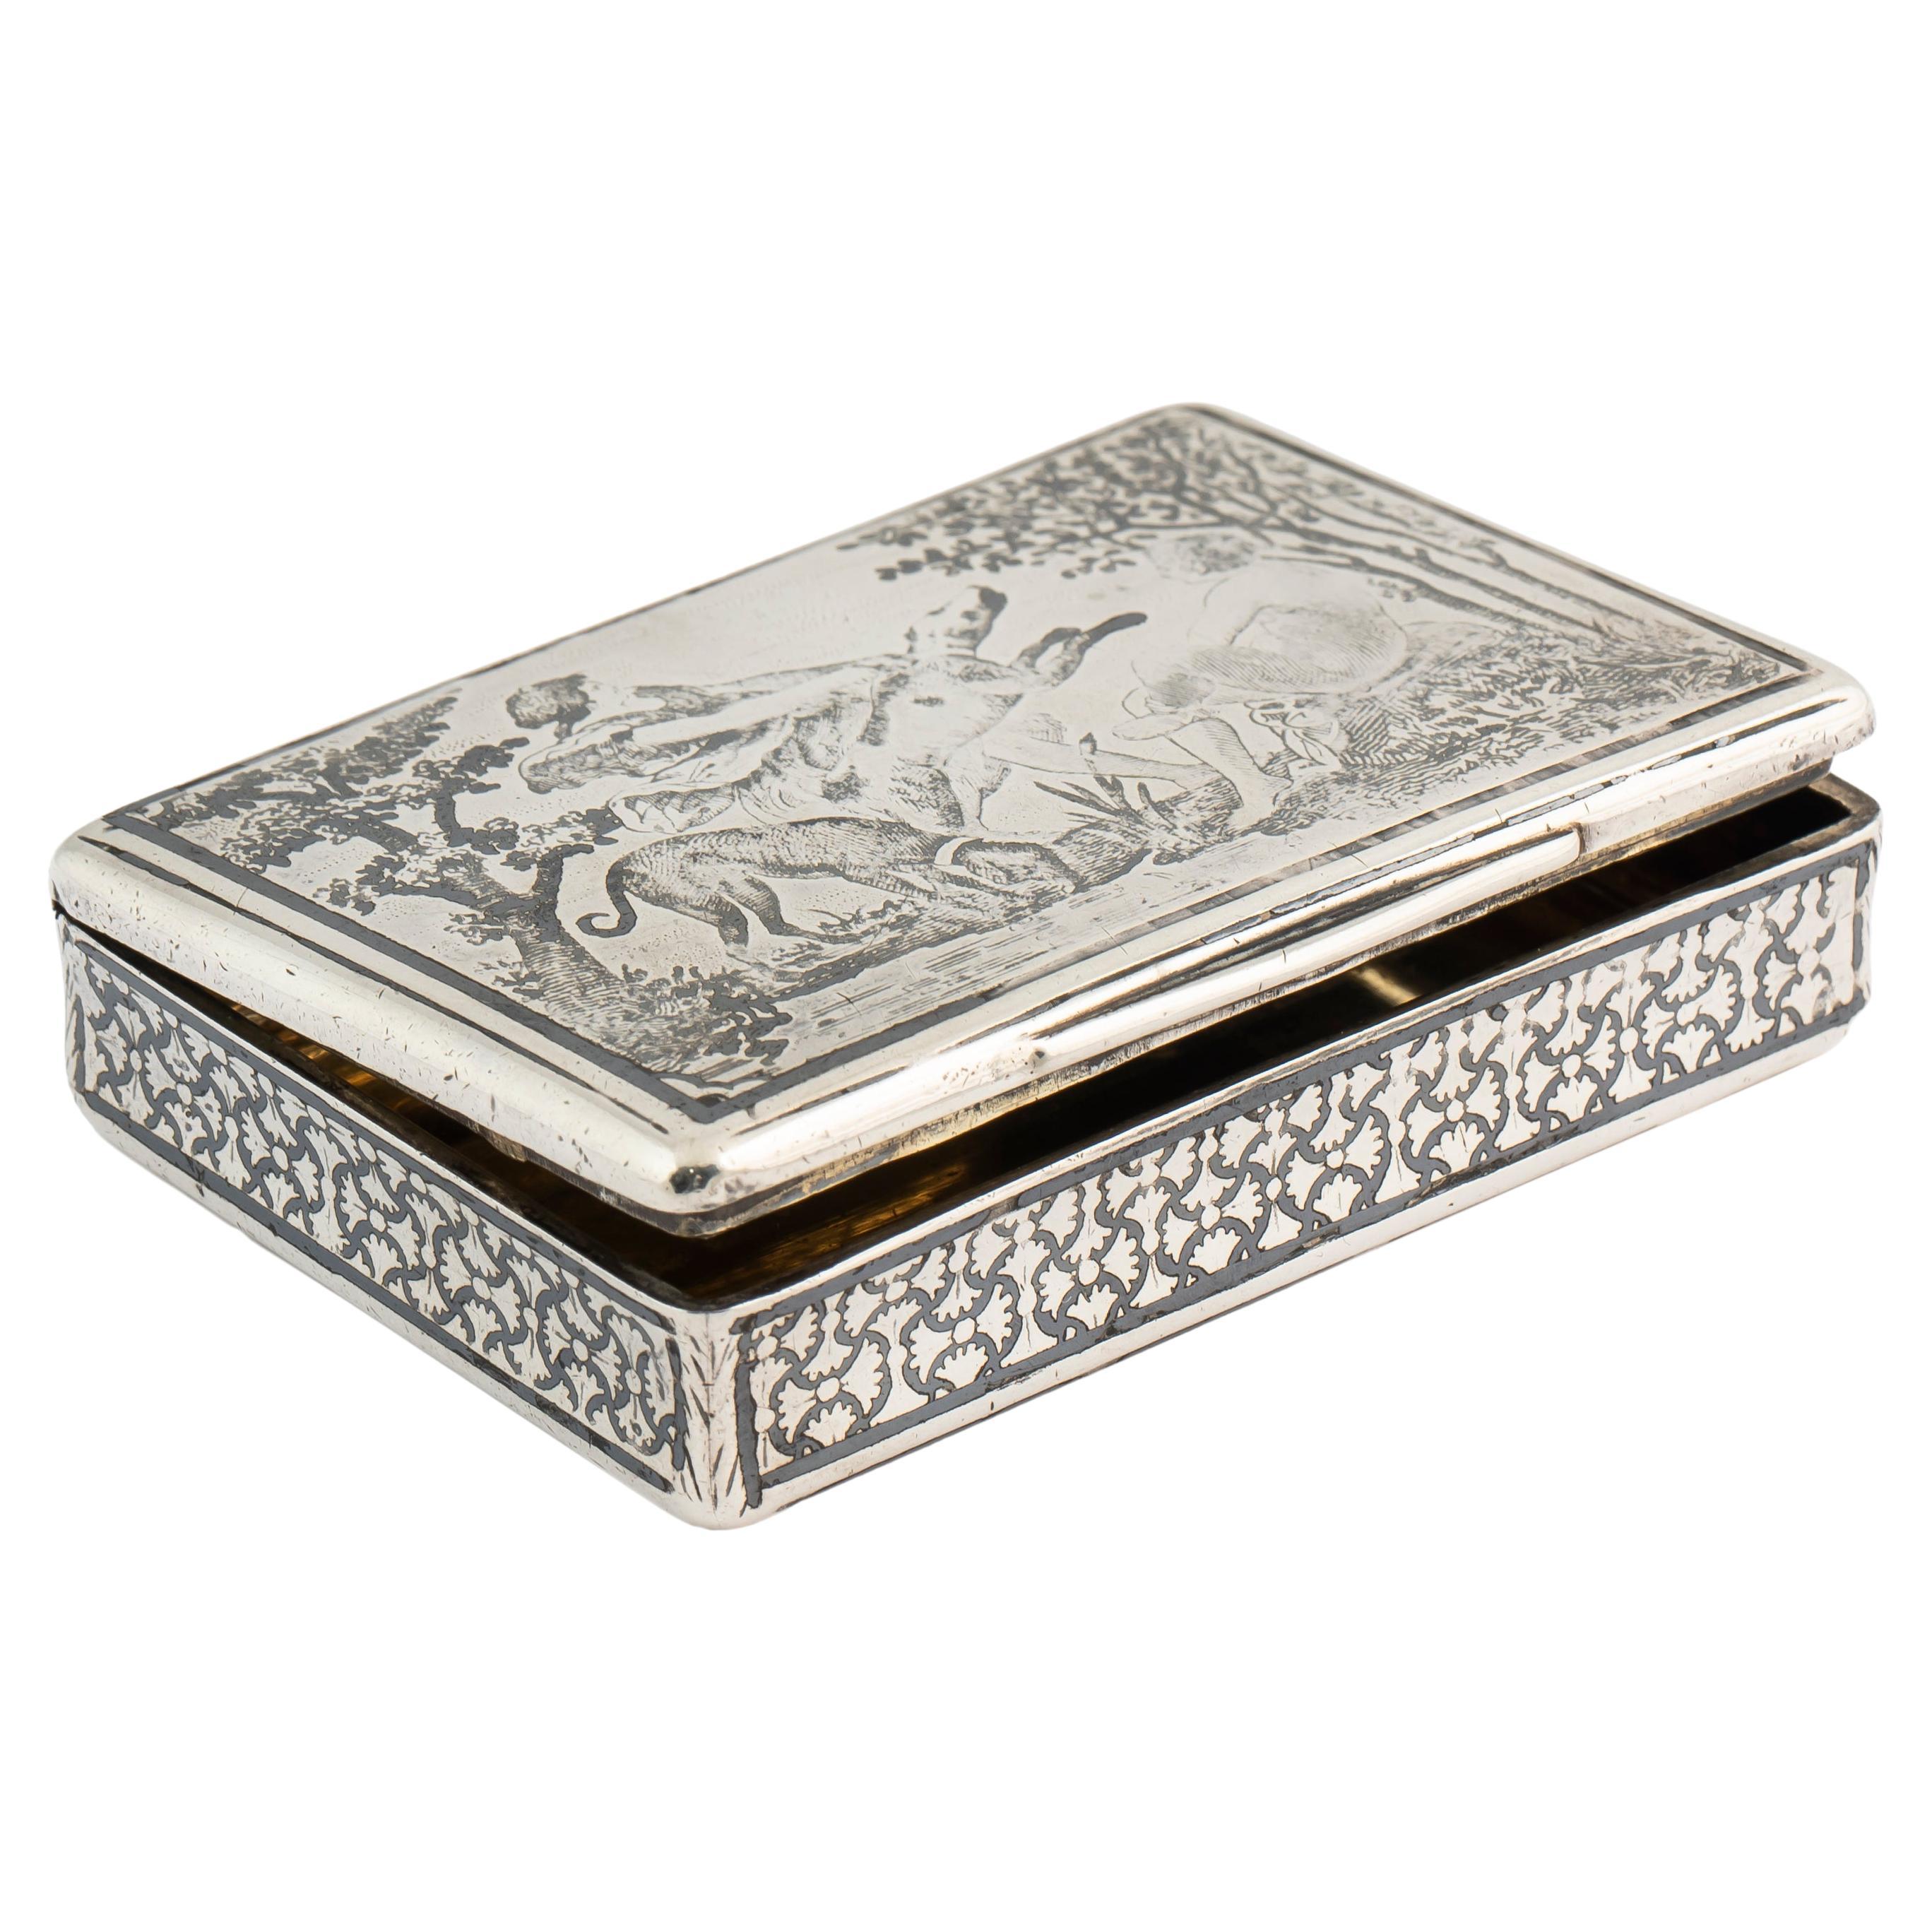 French Silver Niello Snuff Box, Hunting Scene, early 19th century